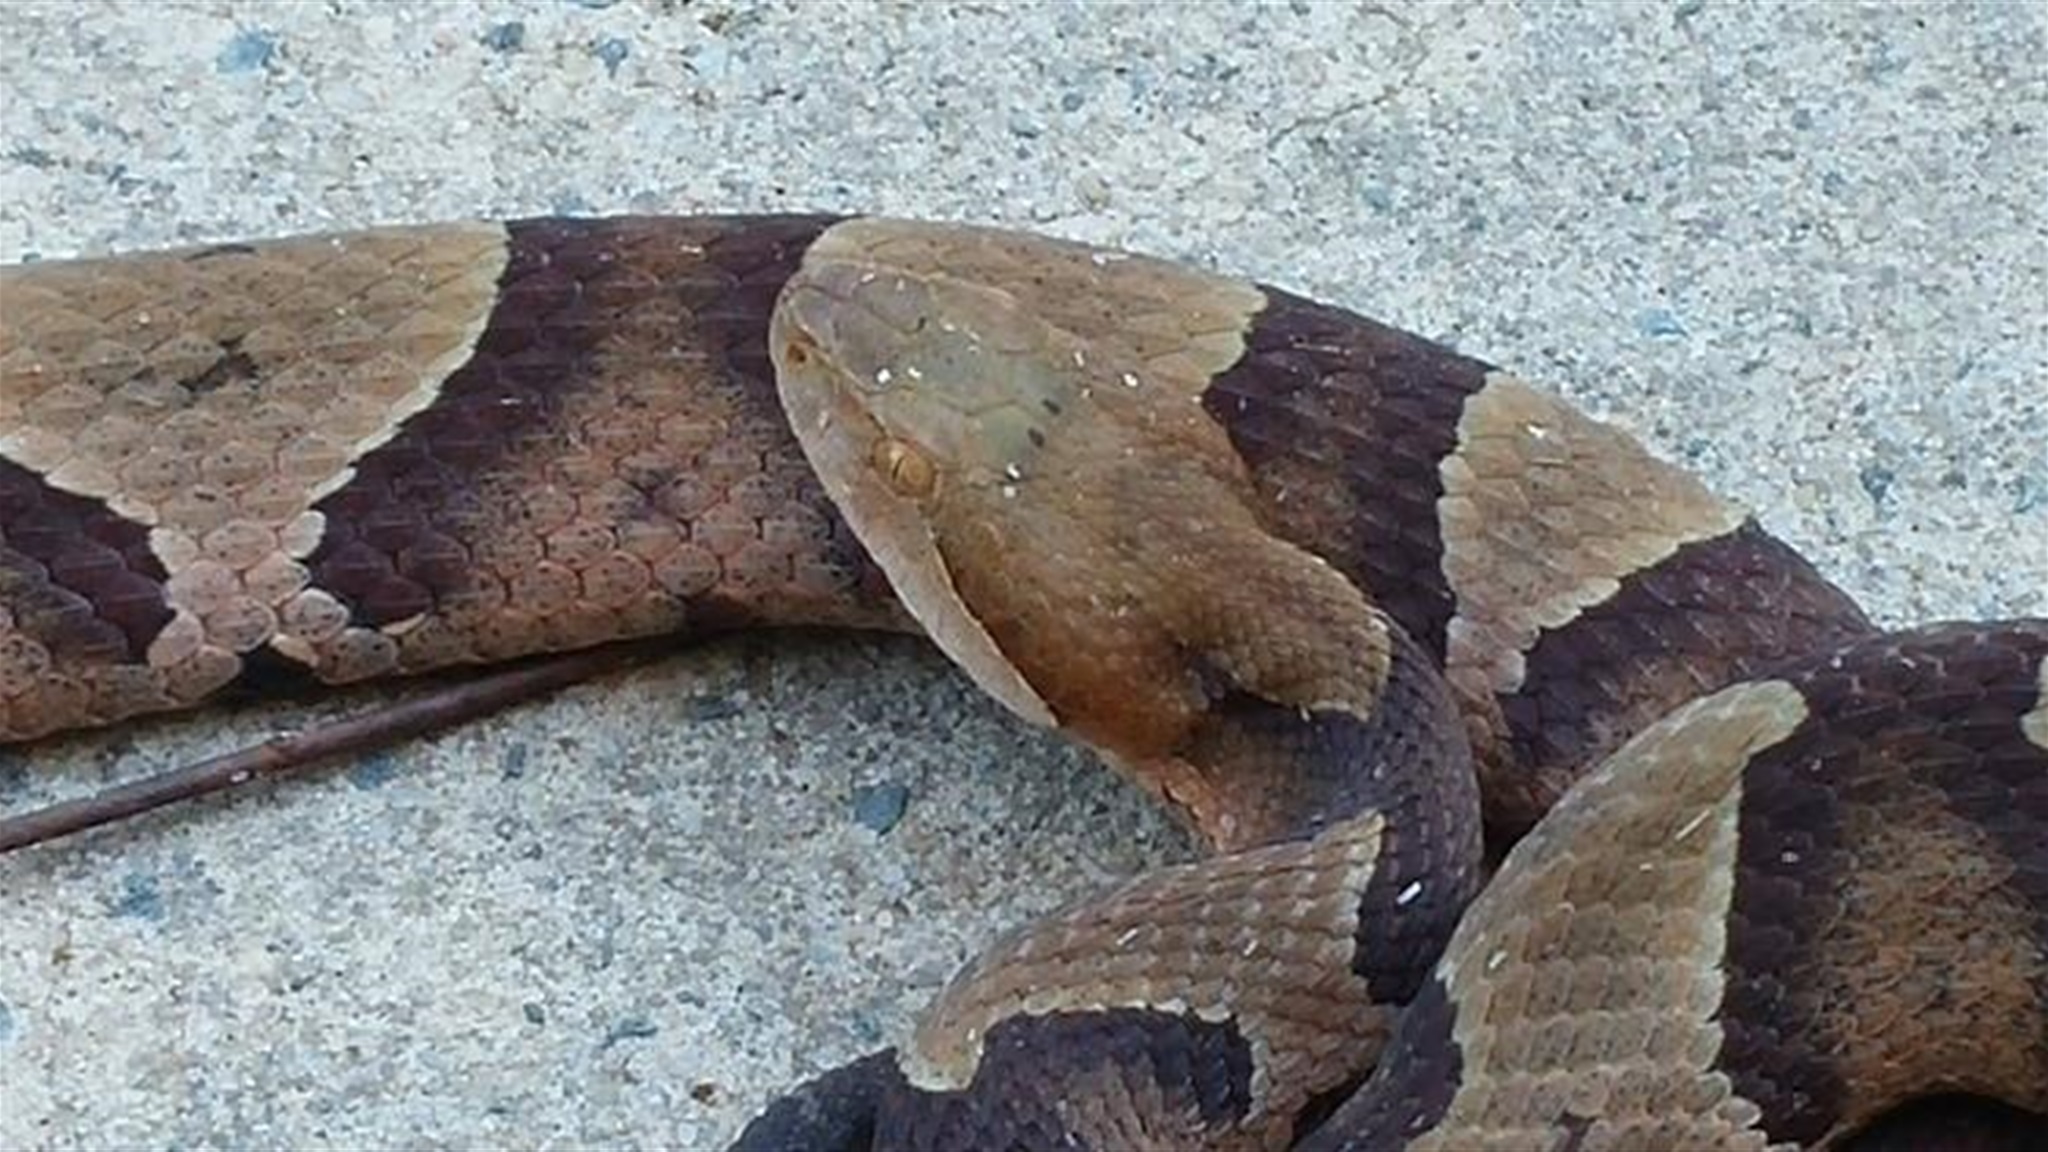 a copperhead snake, head close up to show the heat-shape of the head